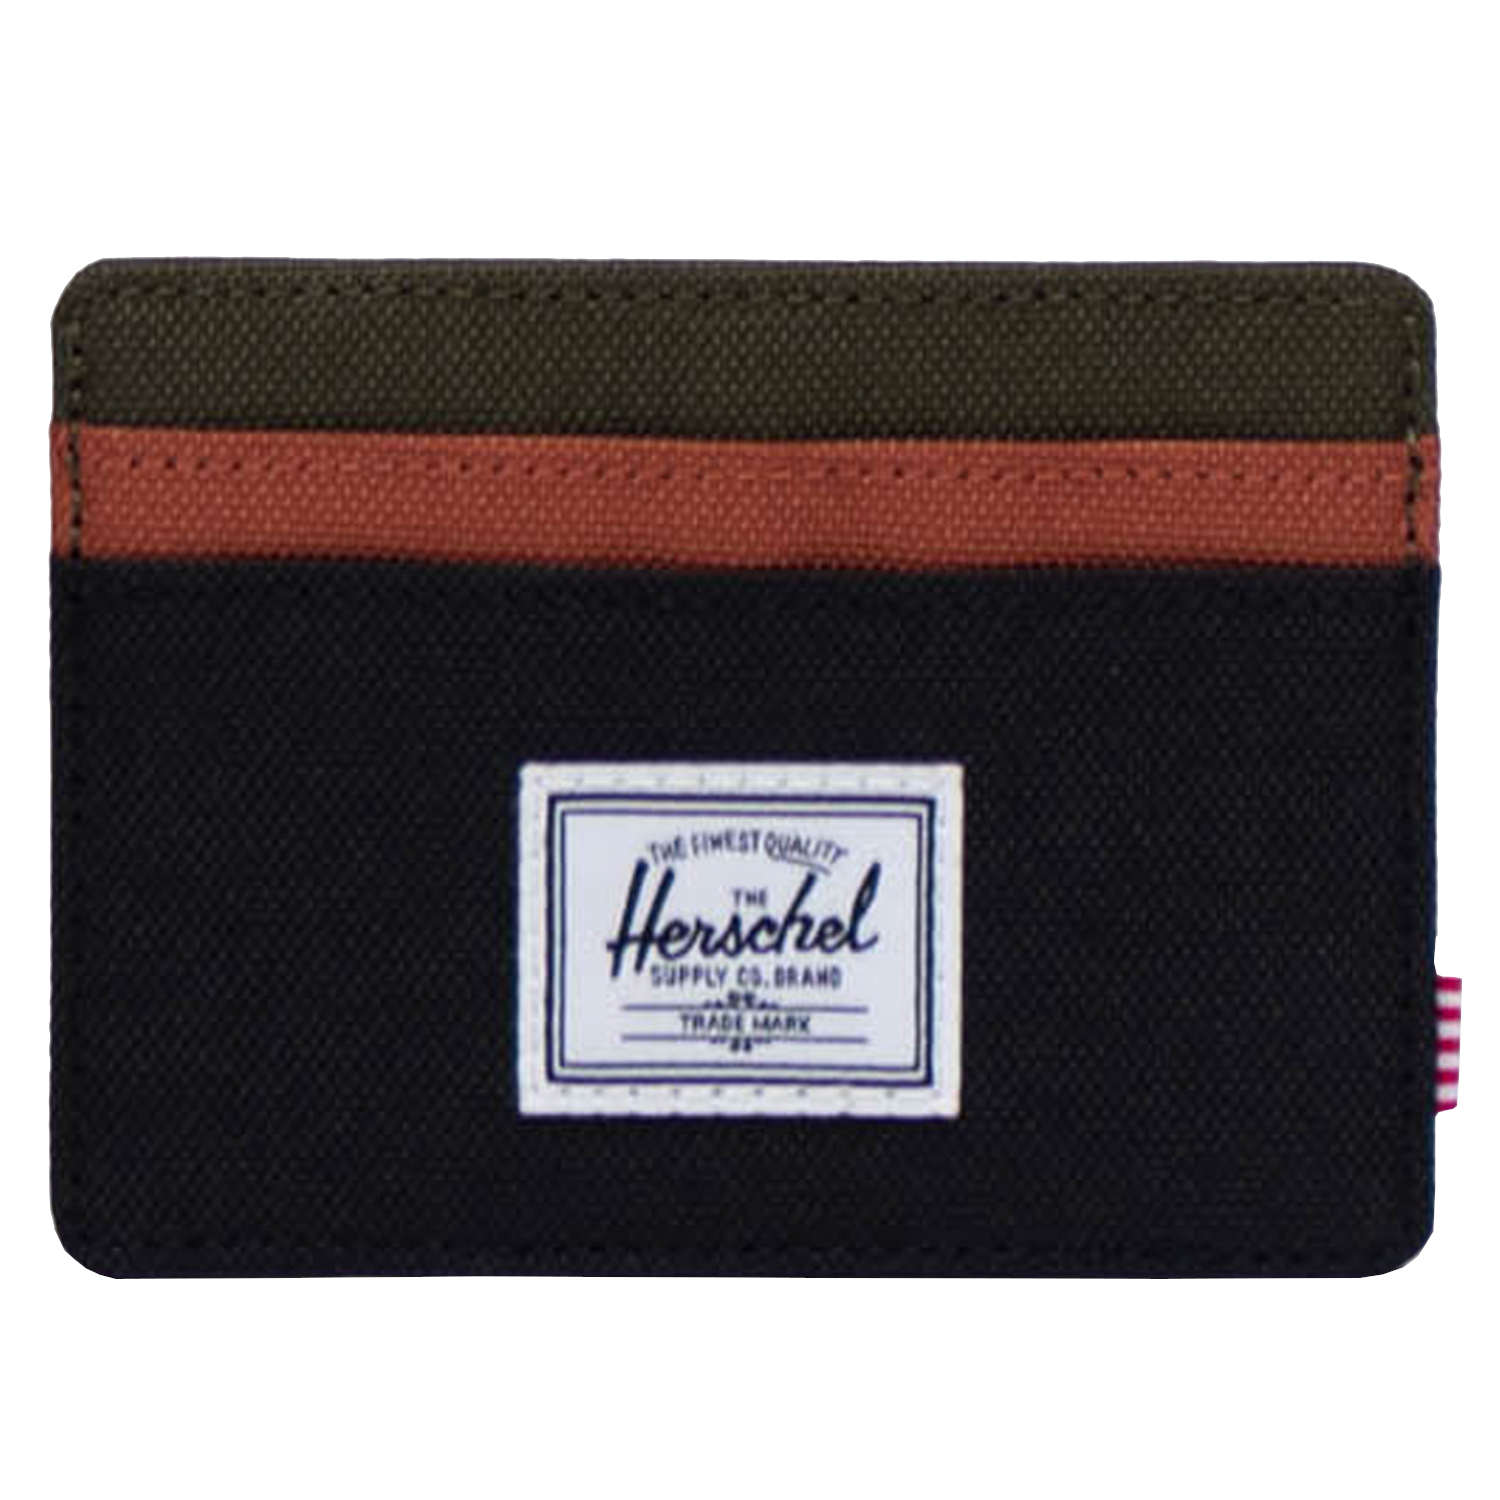 цена Кошелек Herschel Herschel Cardholder Wallet, черный